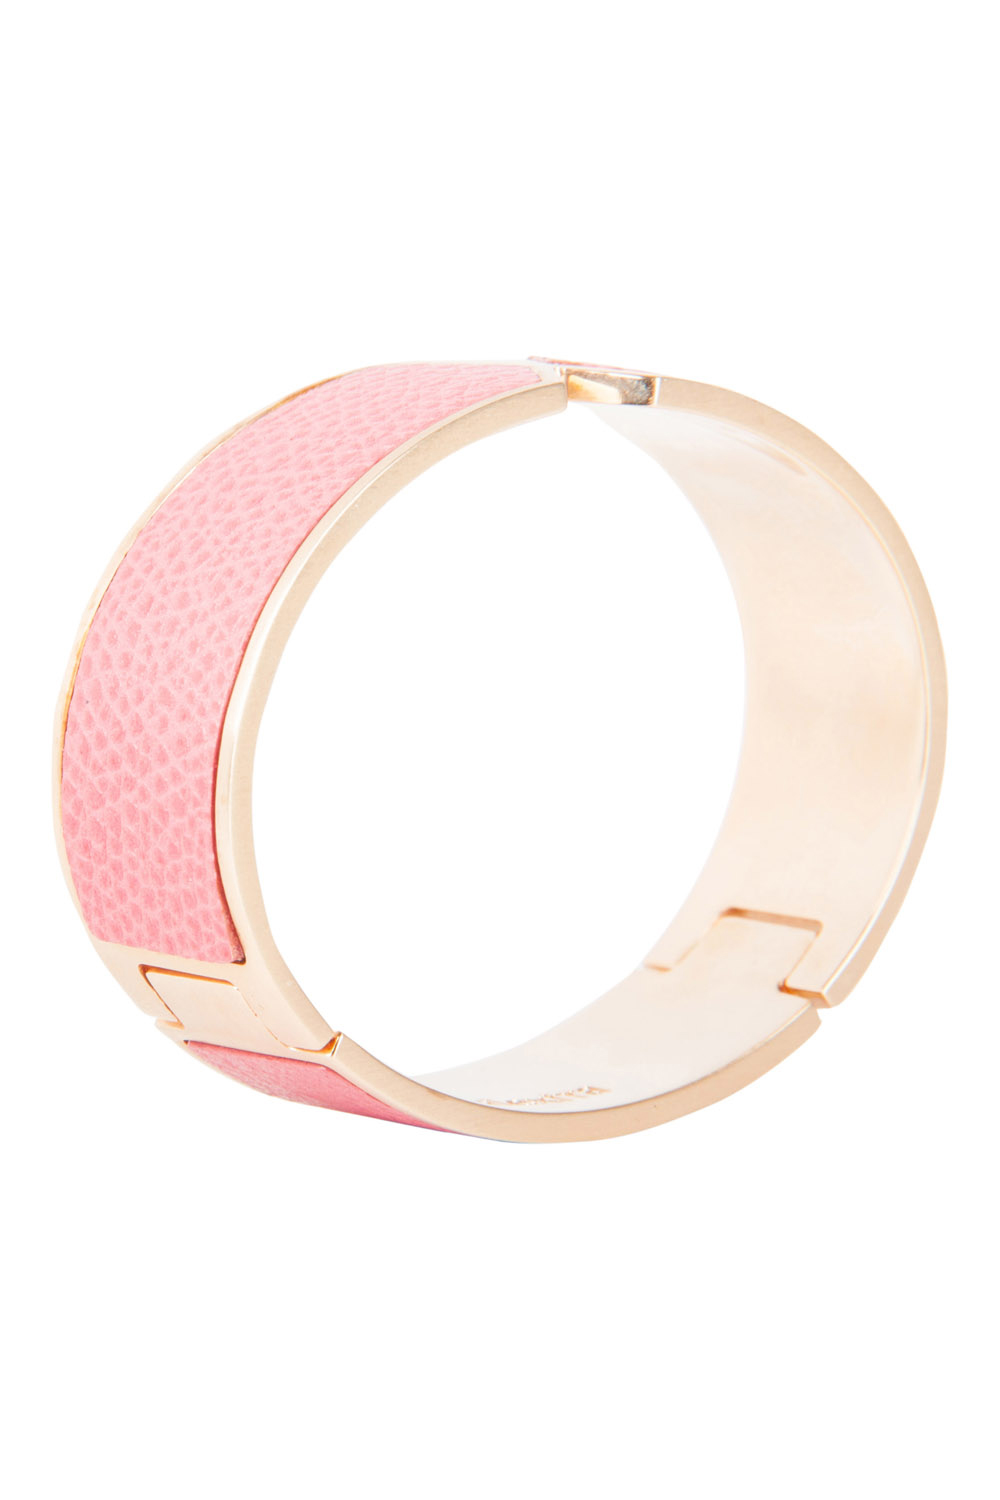 Valextra Pink Leather Gold Tone Hinged Bracelet